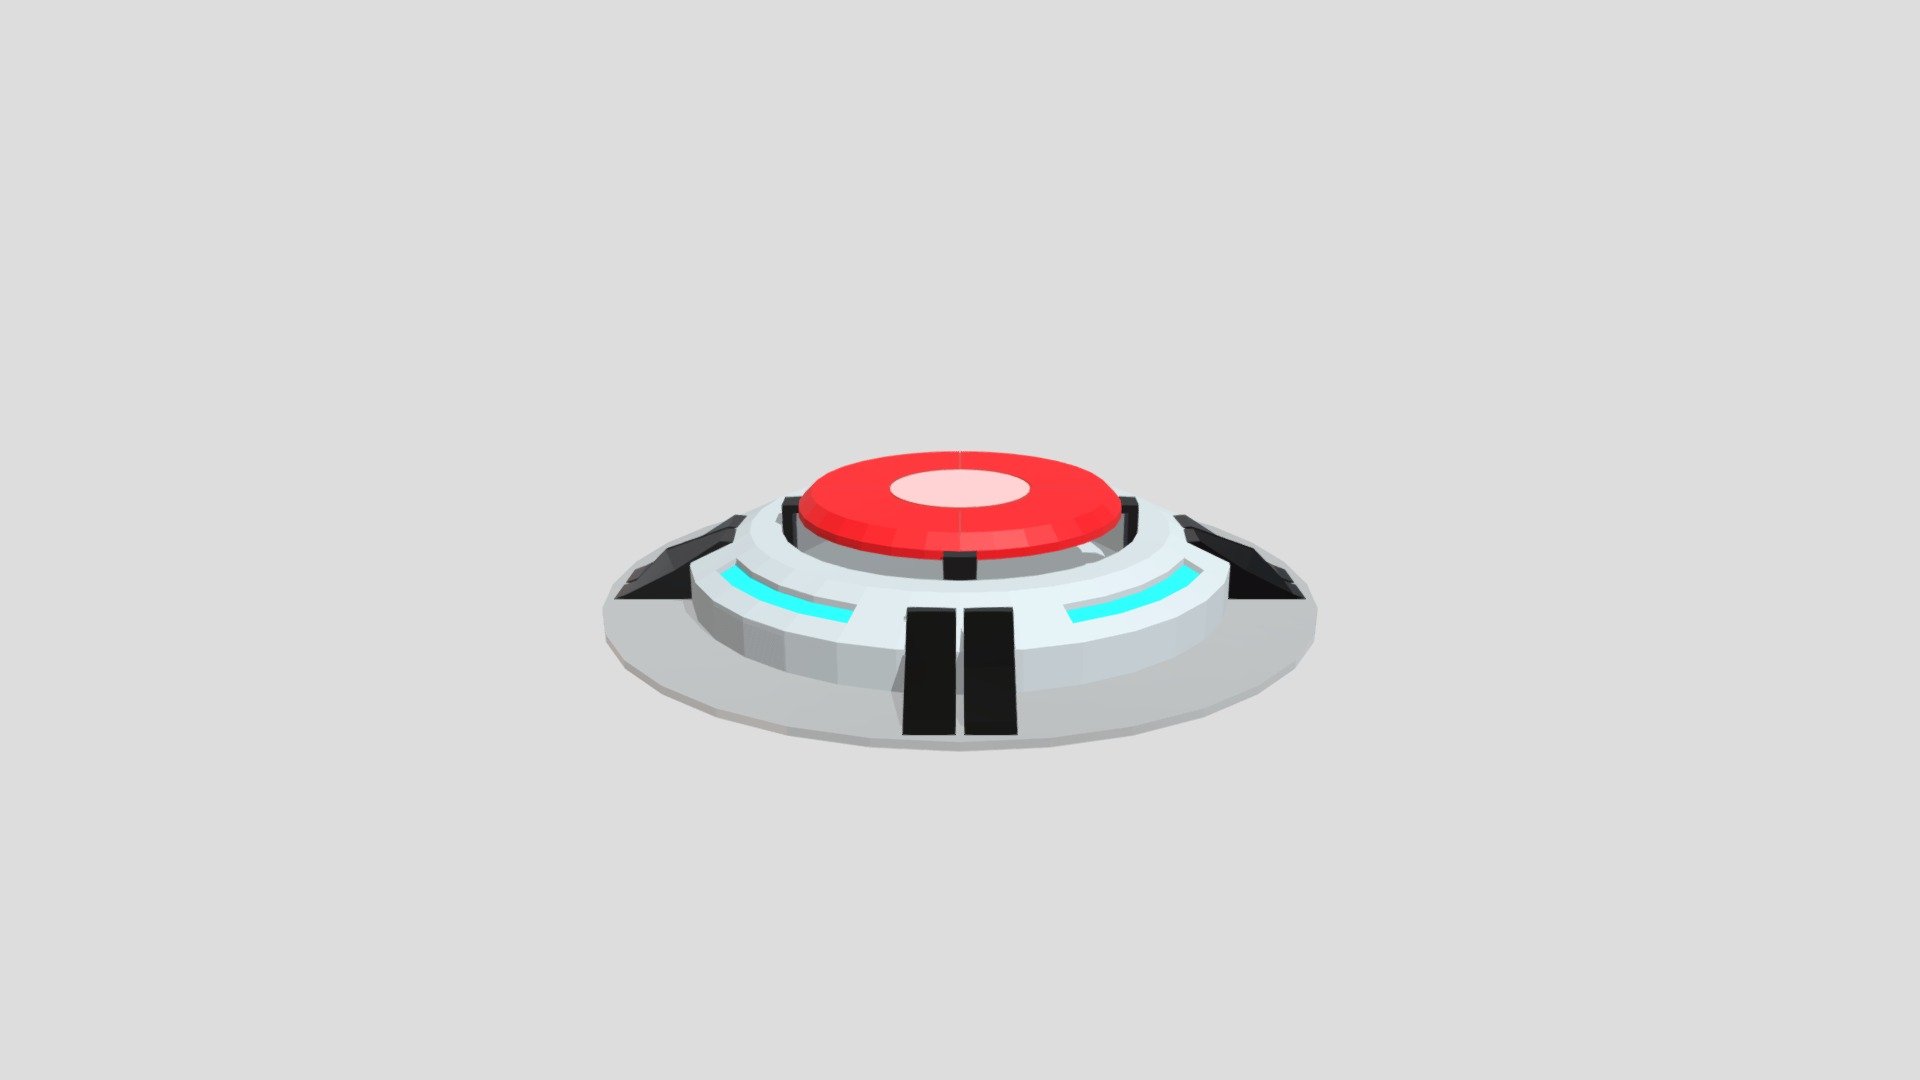 кнопочка из портала - This Is Portal Button - 3D model by dlyarolikov75 3d model